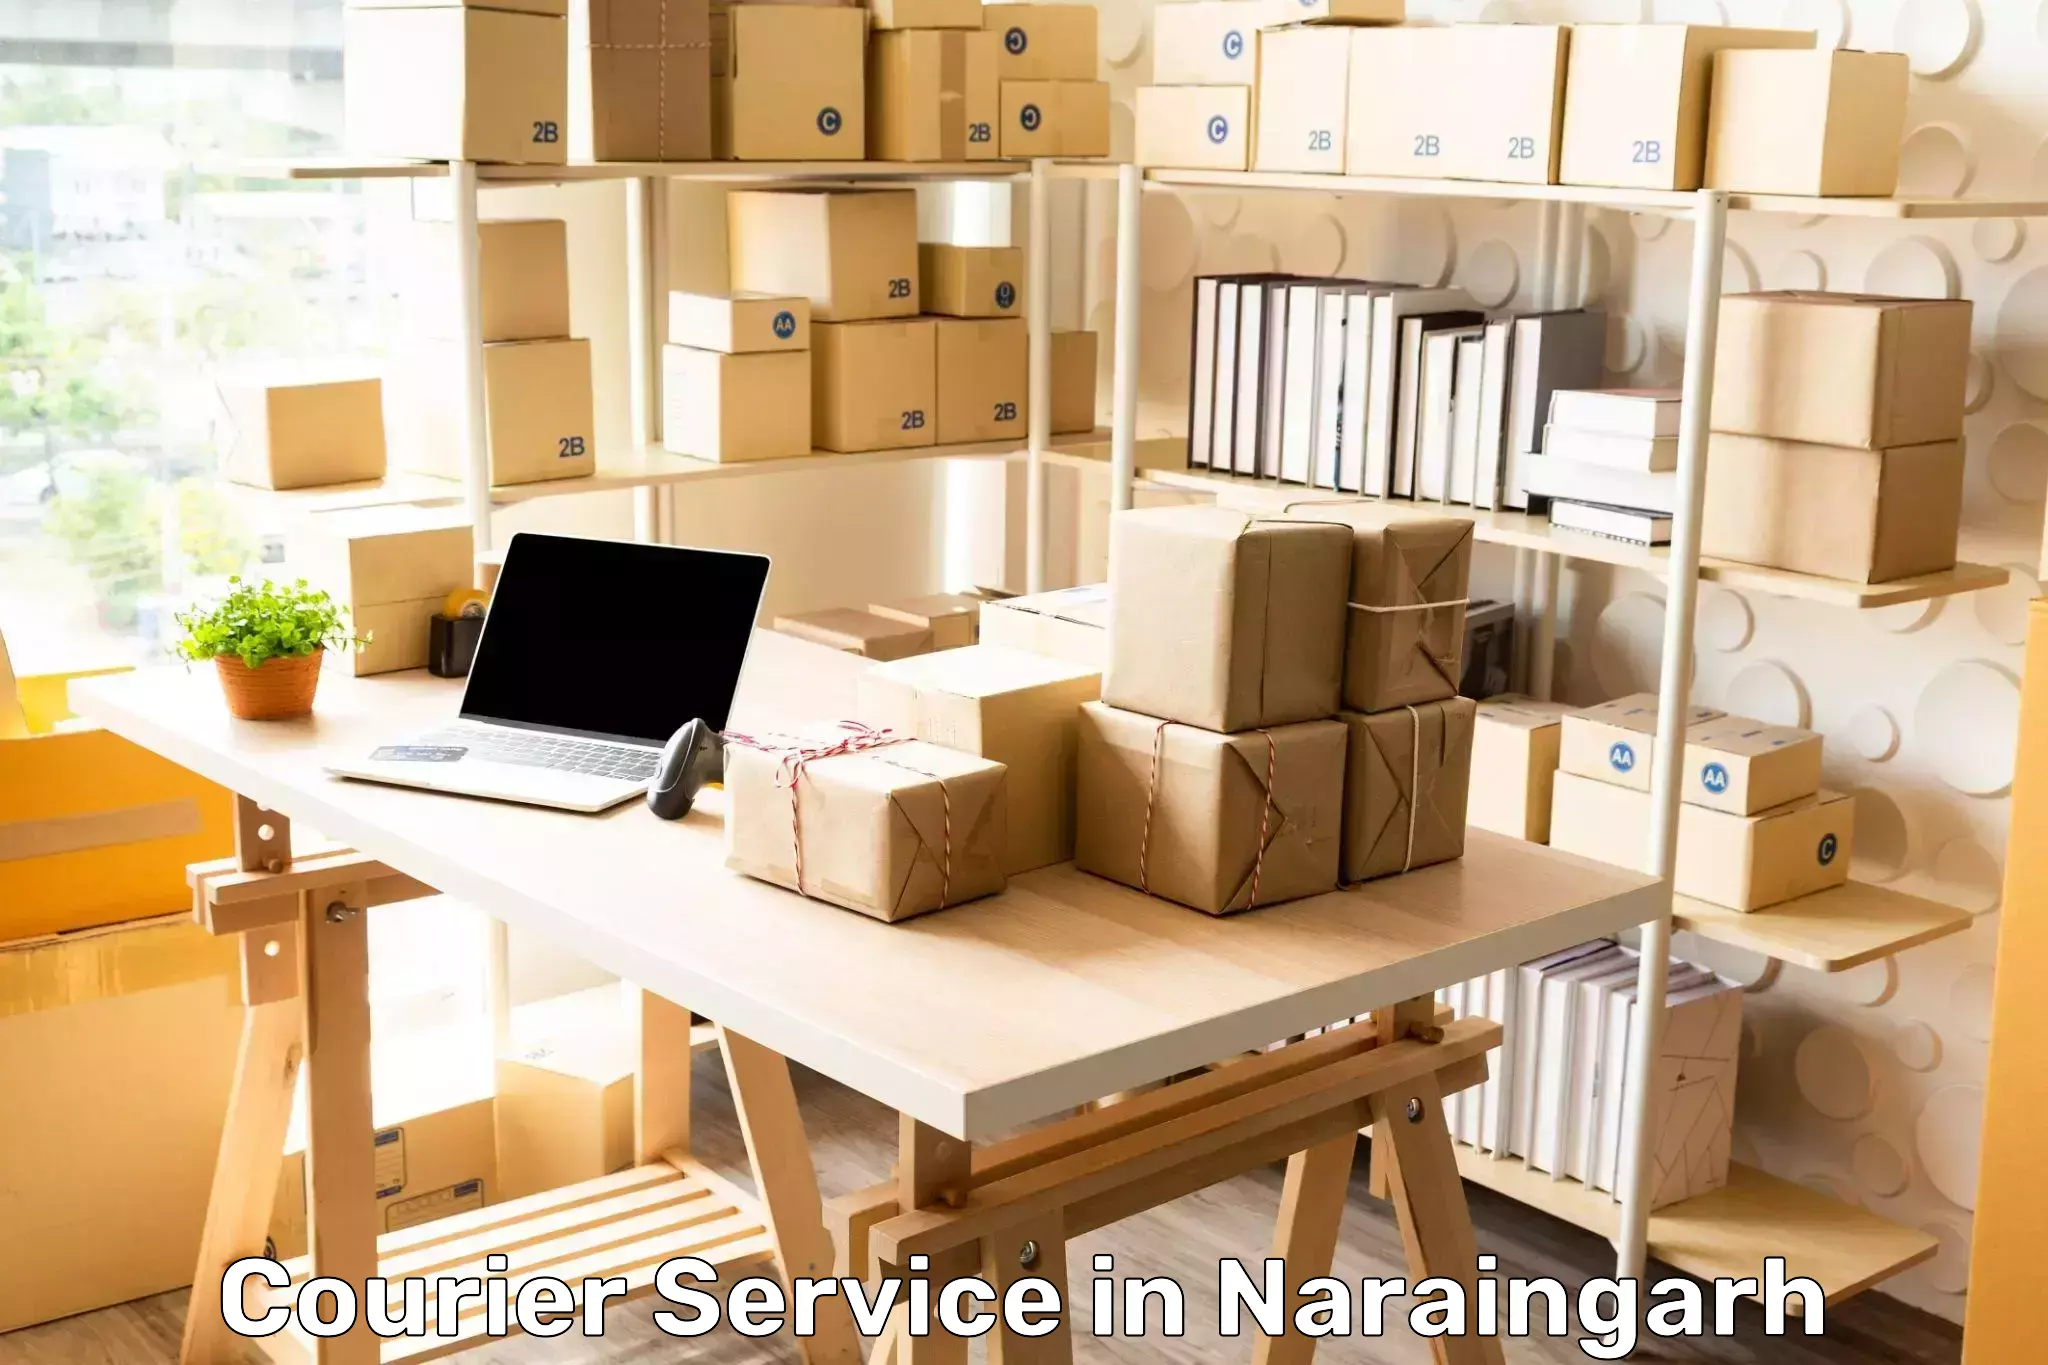 Express courier capabilities in Naraingarh